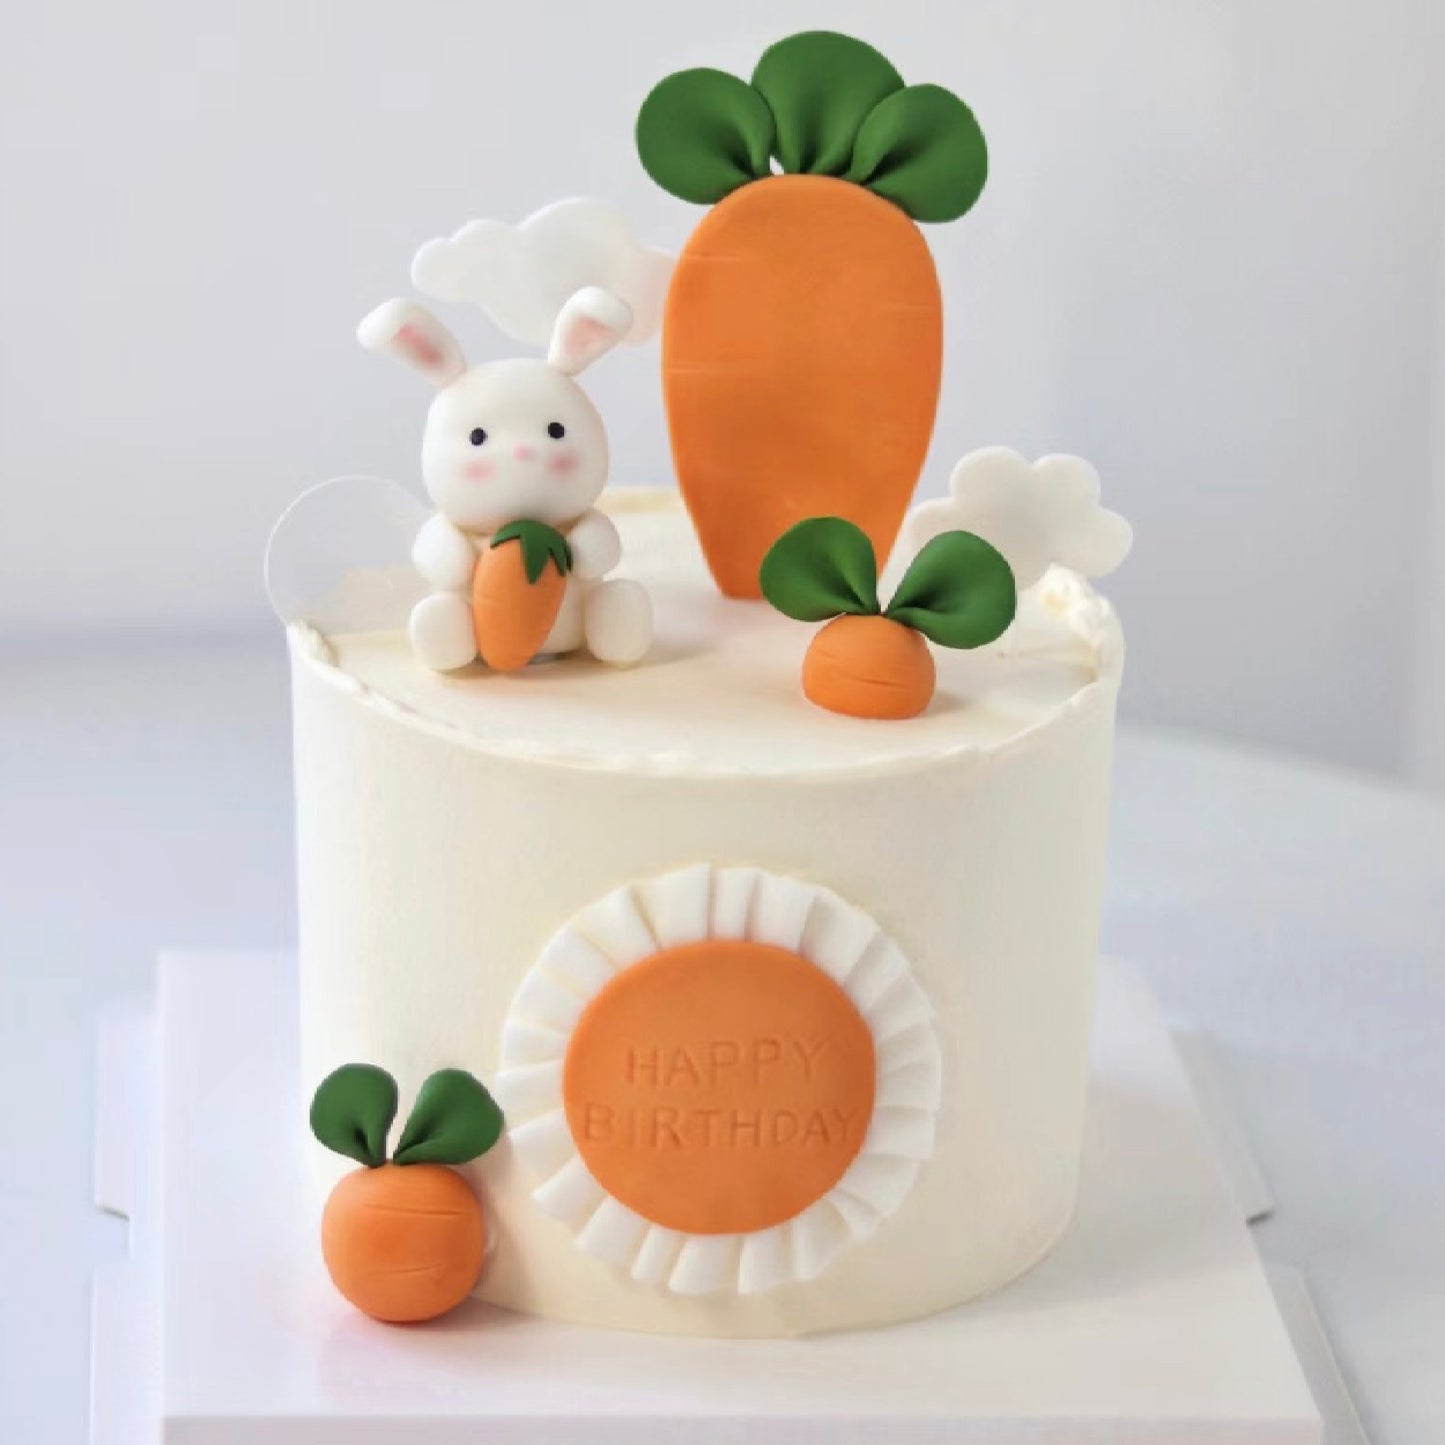 Cutie rabbit loves carrots story cake